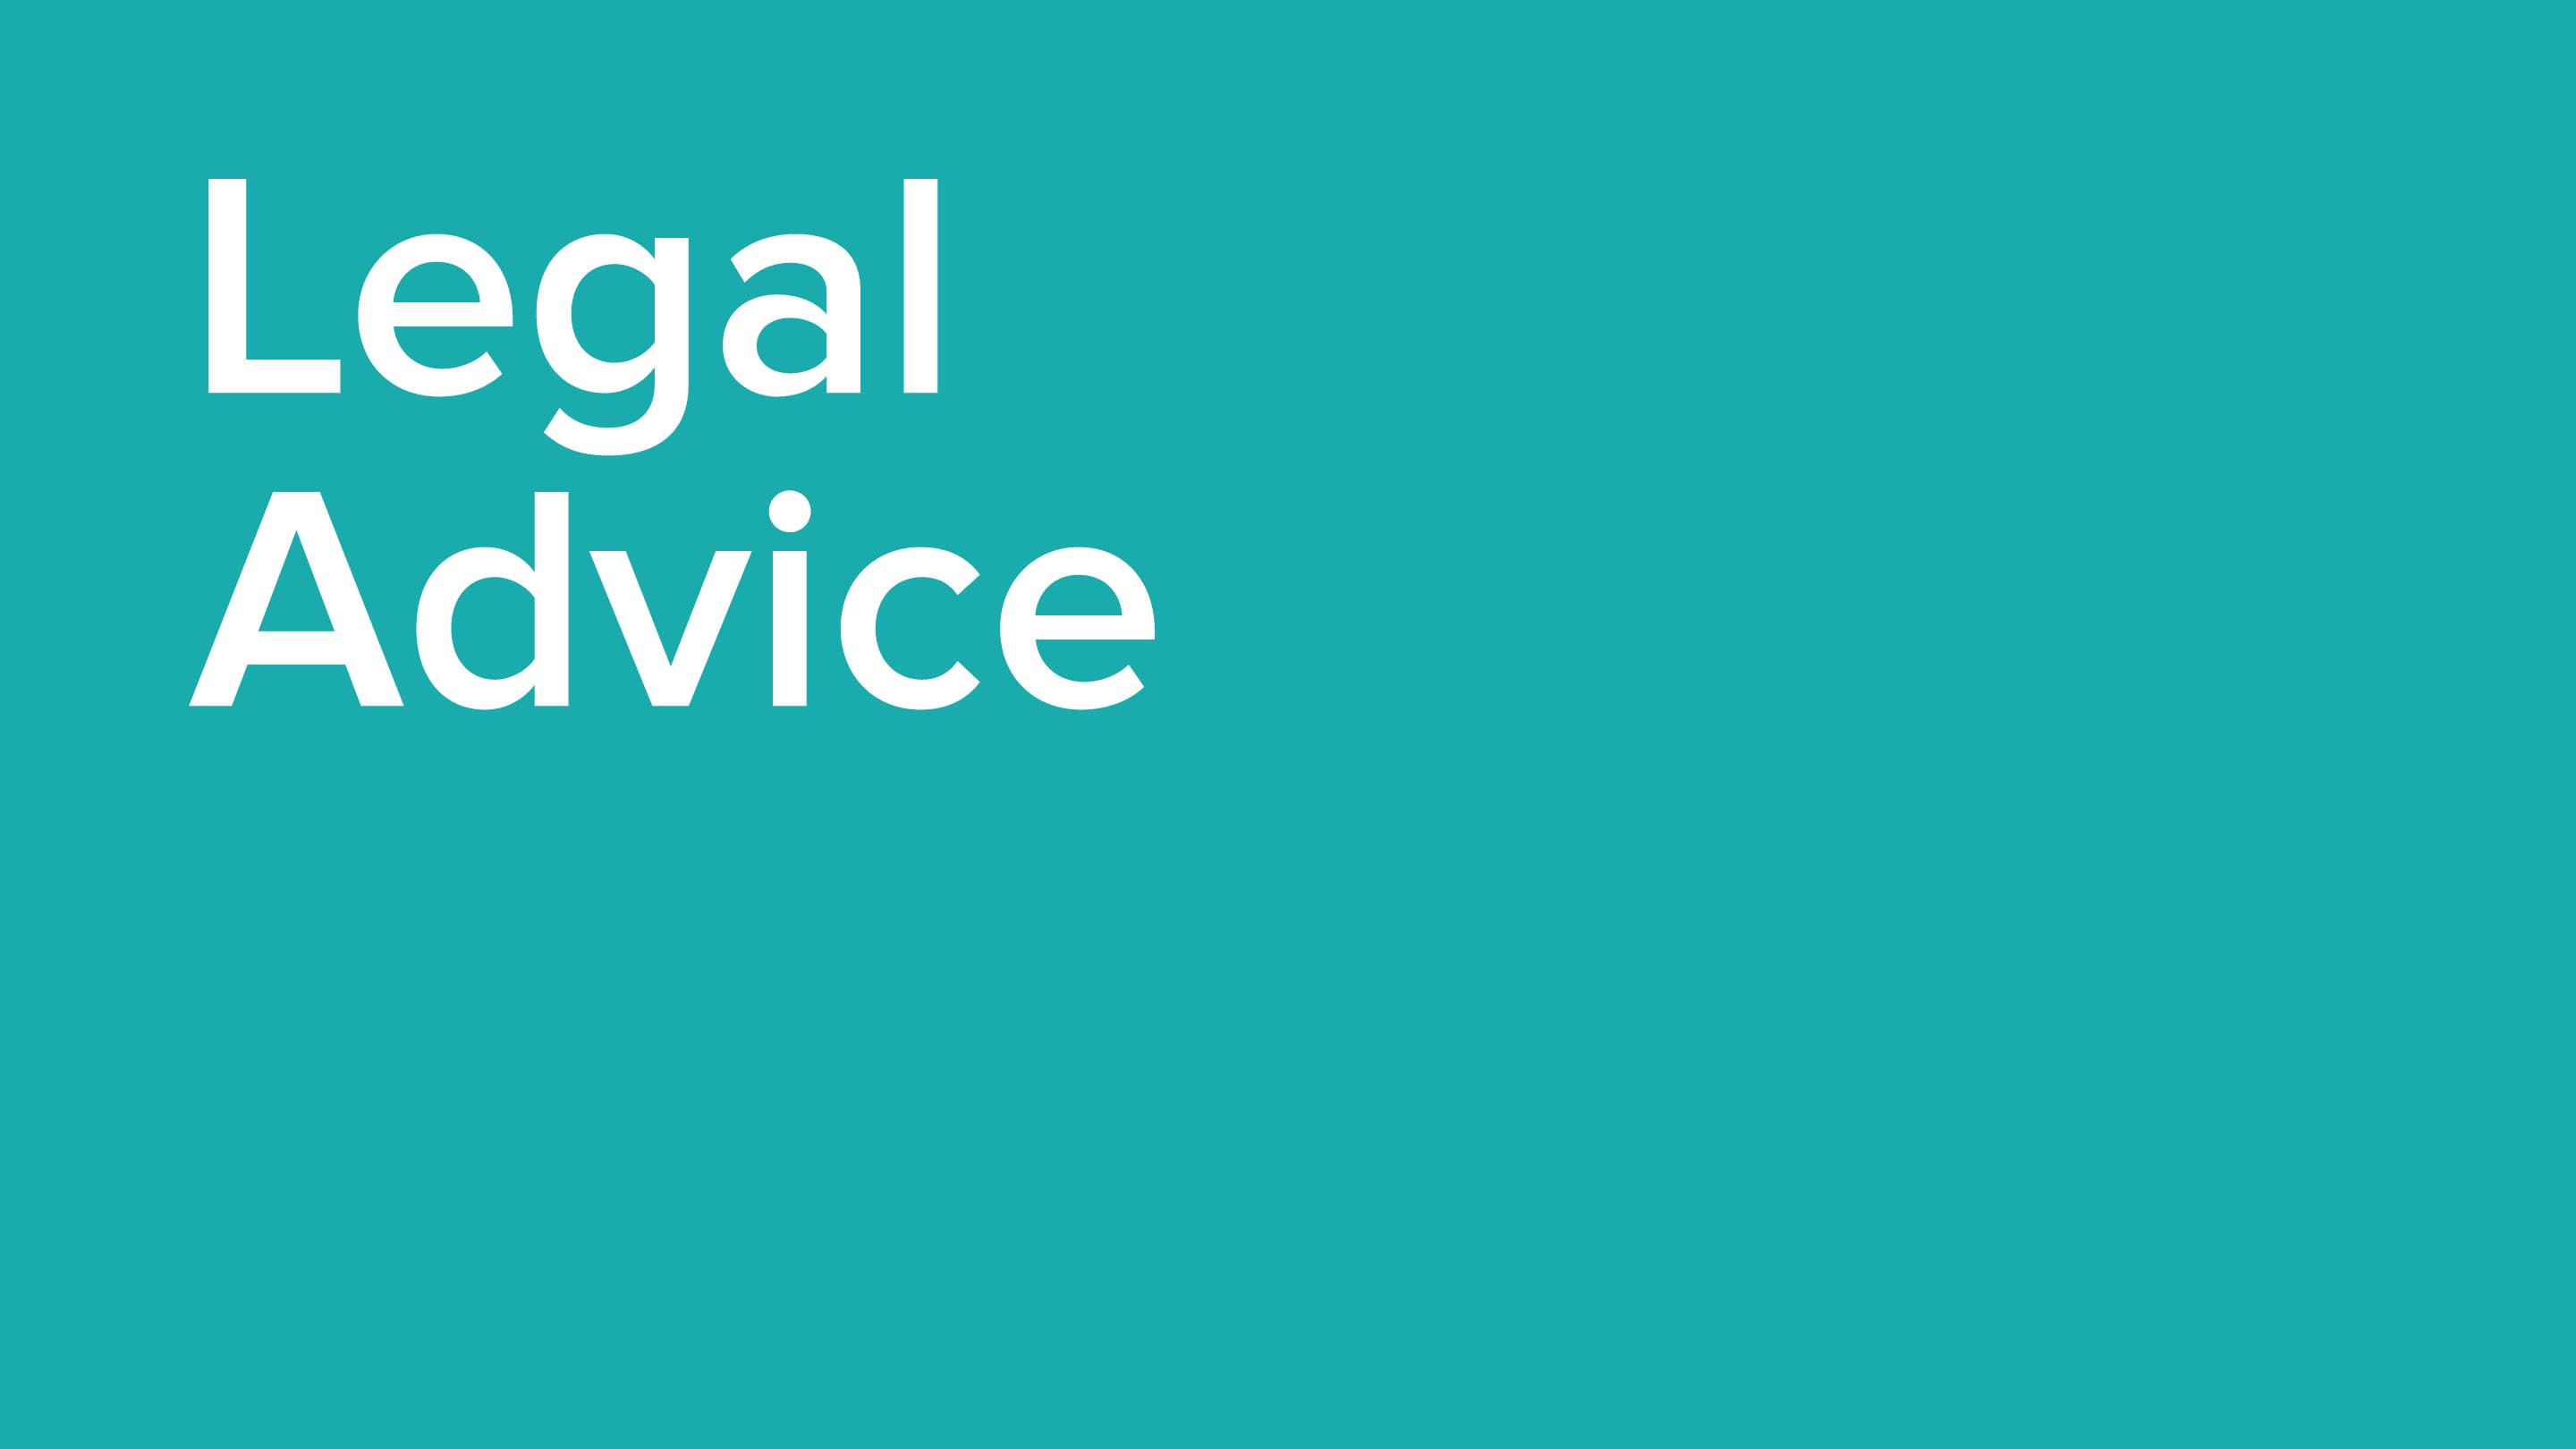 Legal advice button image